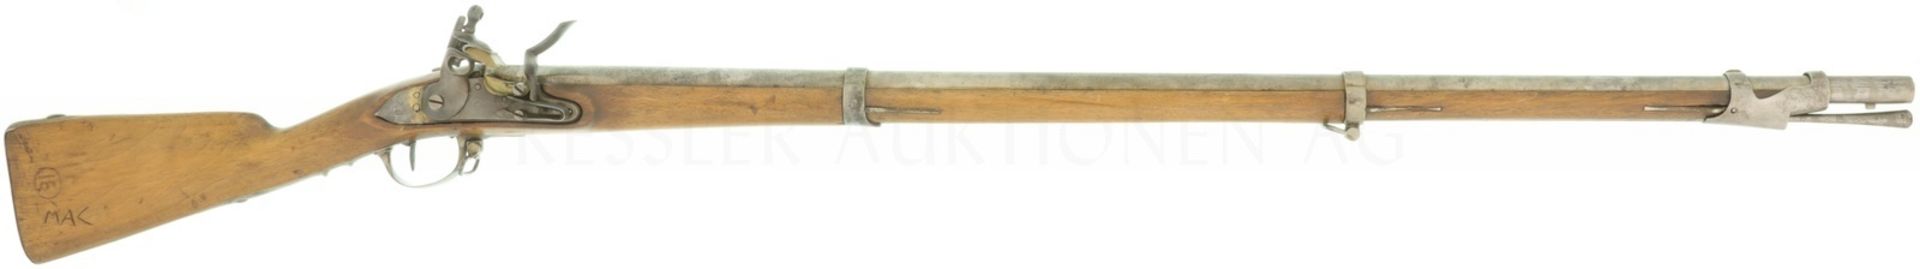 Steinschlossgewehr, Charleville Mod. 1777, Kal. 17.6mm